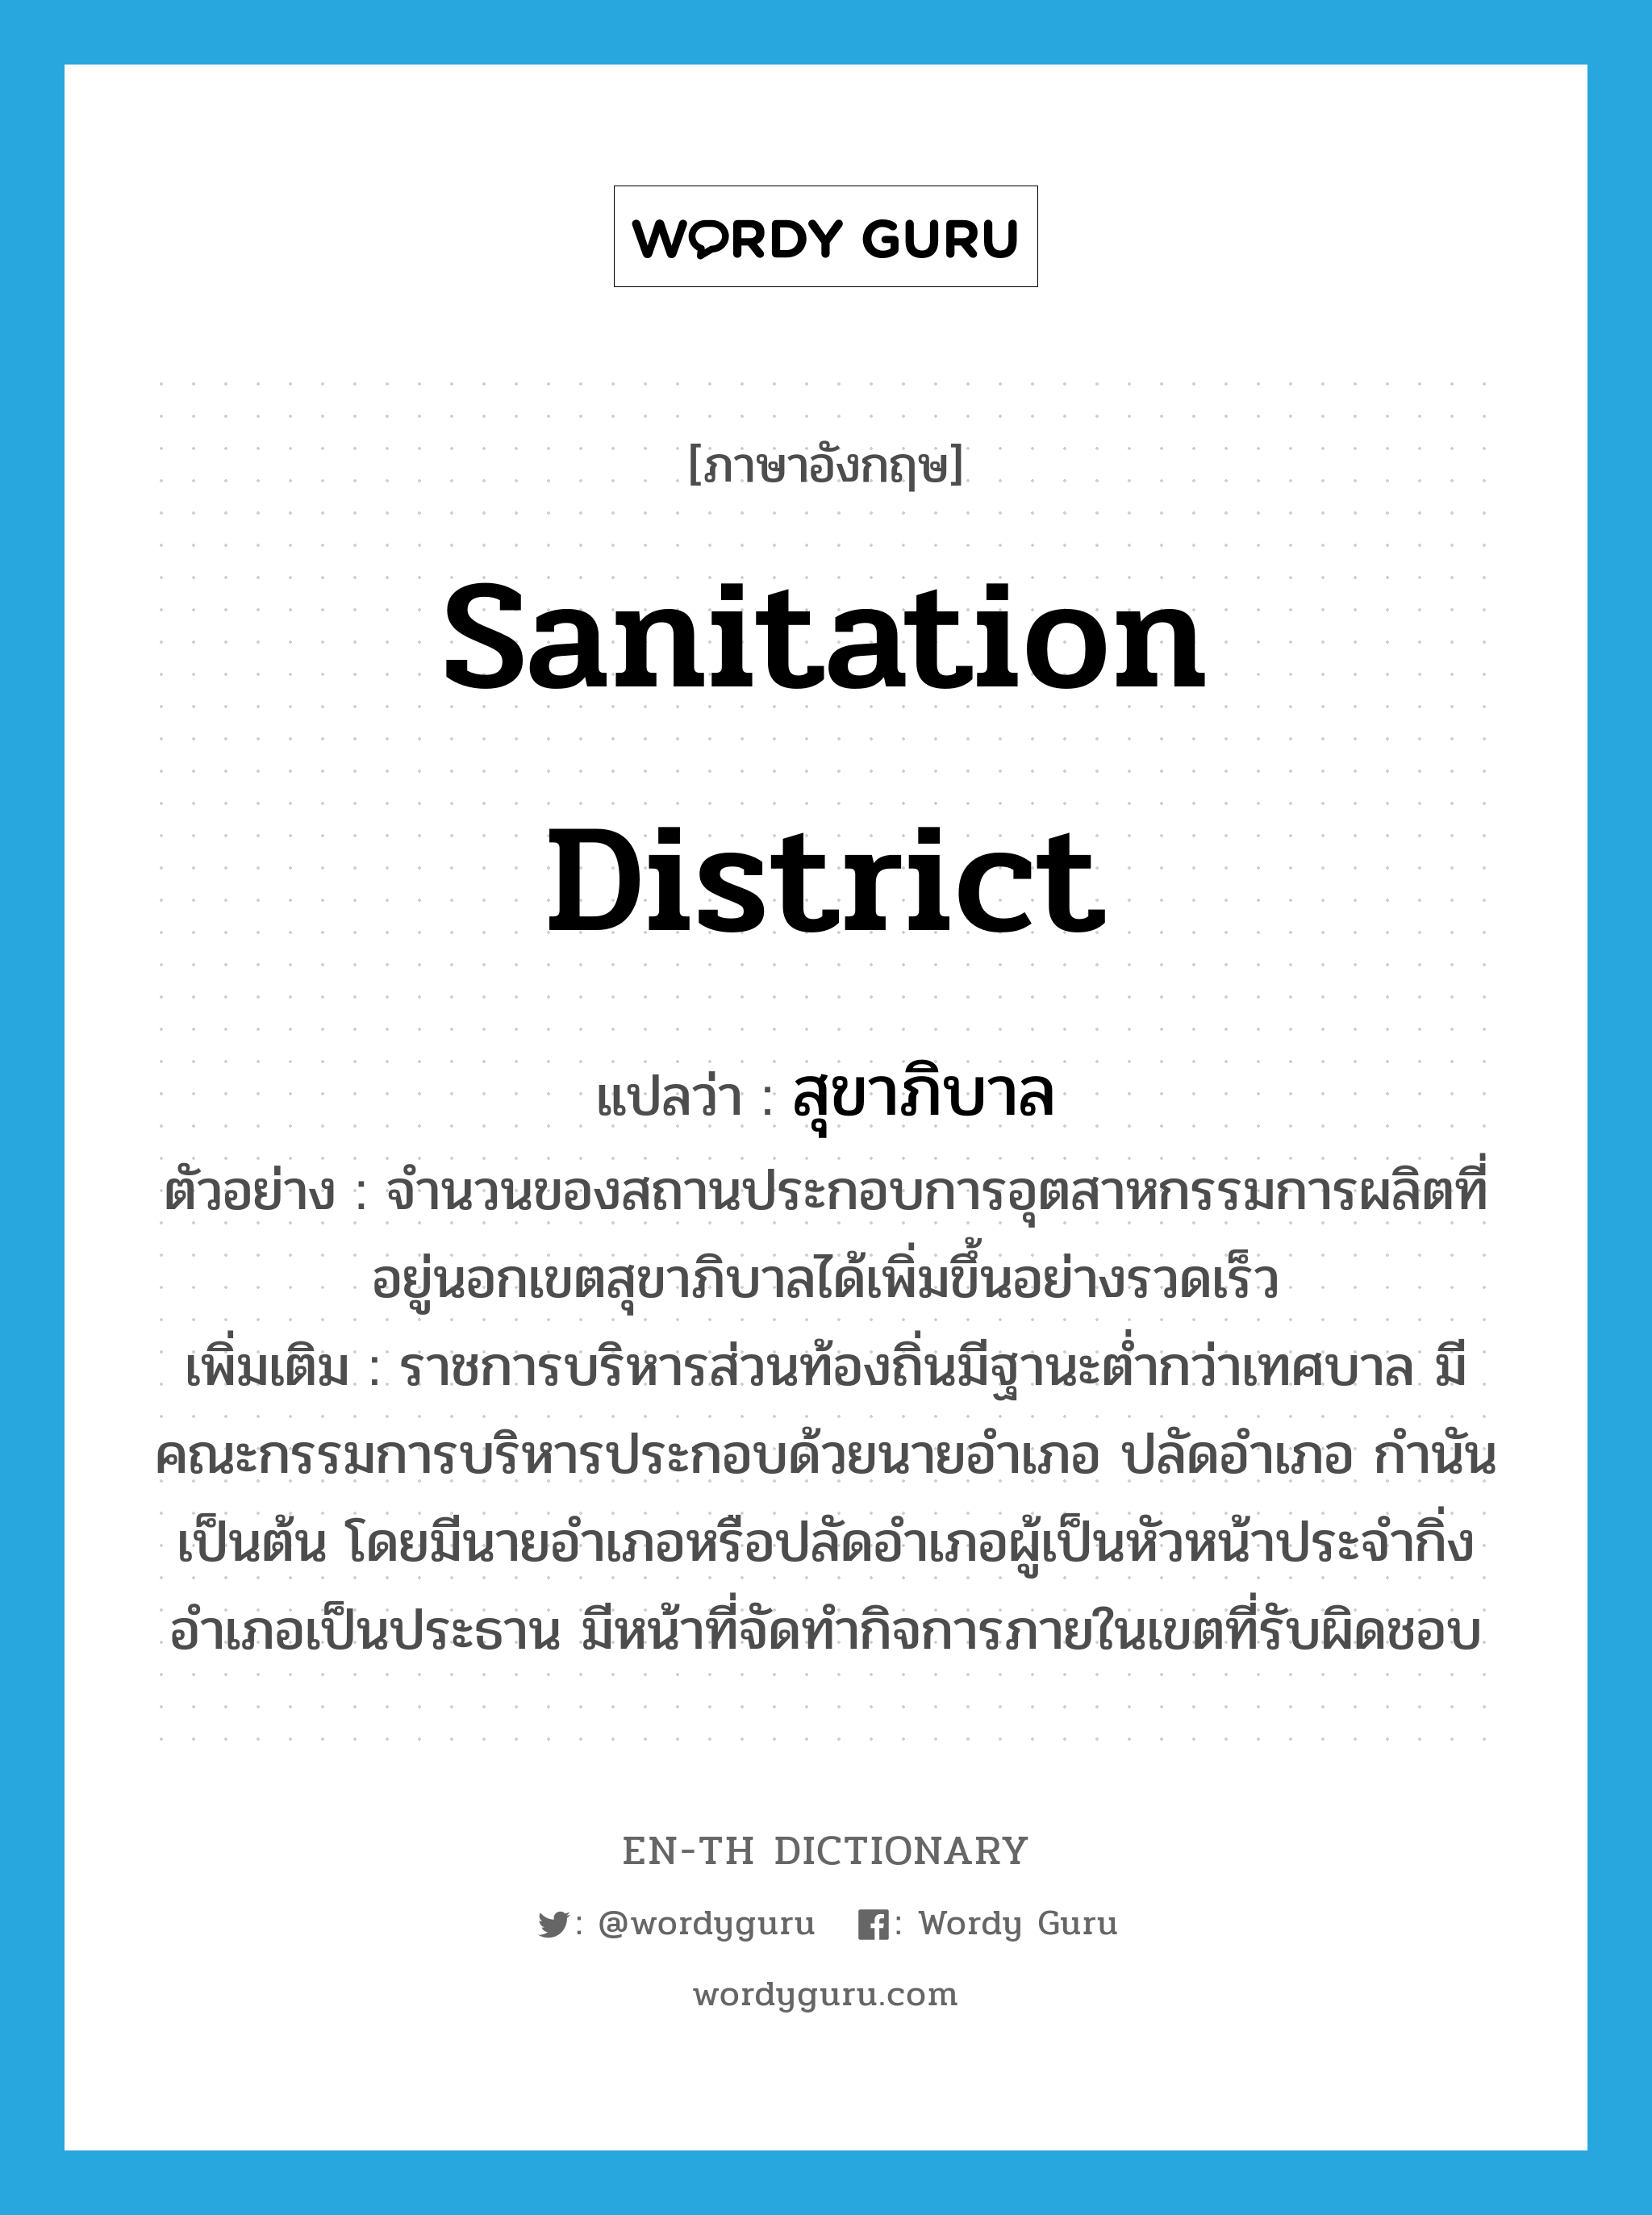 sanitation district แปลว่า?, คำศัพท์ภาษาอังกฤษ sanitation district แปลว่า สุขาภิบาล ประเภท N ตัวอย่าง จำนวนของสถานประกอบการอุตสาหกรรมการผลิตที่อยู่นอกเขตสุขาภิบาลได้เพิ่มขึ้นอย่างรวดเร็ว เพิ่มเติม ราชการบริหารส่วนท้องถิ่นมีฐานะต่ำกว่าเทศบาล มีคณะกรรมการบริหารประกอบด้วยนายอำเภอ ปลัดอำเภอ กำนัน เป็นต้น โดยมีนายอำเภอหรือปลัดอำเภอผู้เป็นหัวหน้าประจำกิ่งอำเภอเป็นประธาน มีหน้าที่จัดทำกิจการภายในเขตที่รับผิดชอบ หมวด N